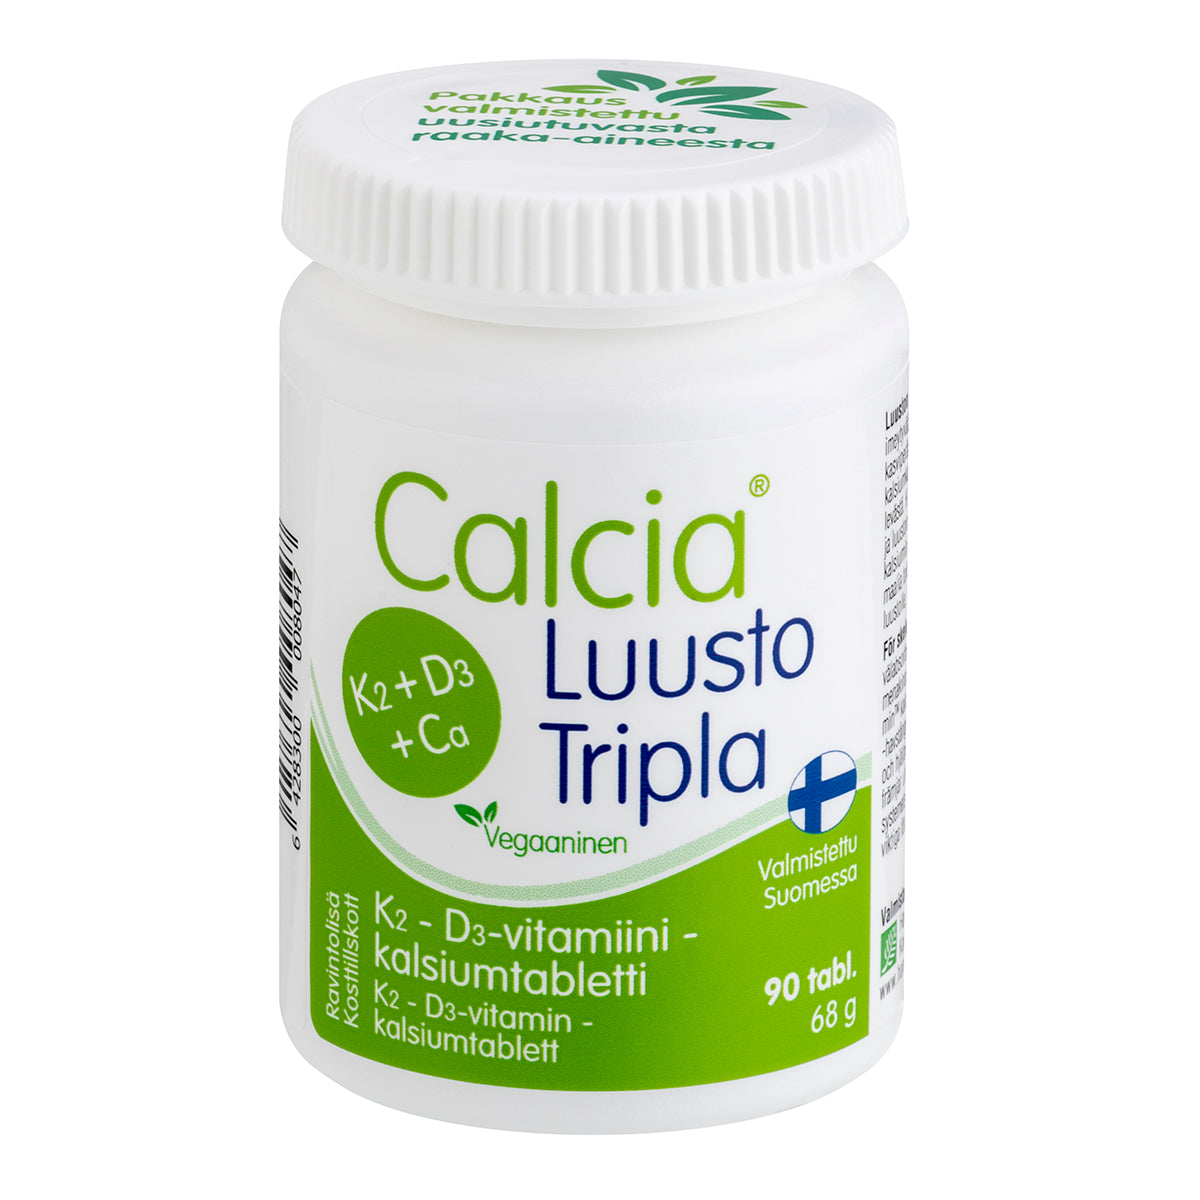 Calcia Luusto Tripla - K2 - D3-vitamiini-Kalsiumtabletti 90 tabl.